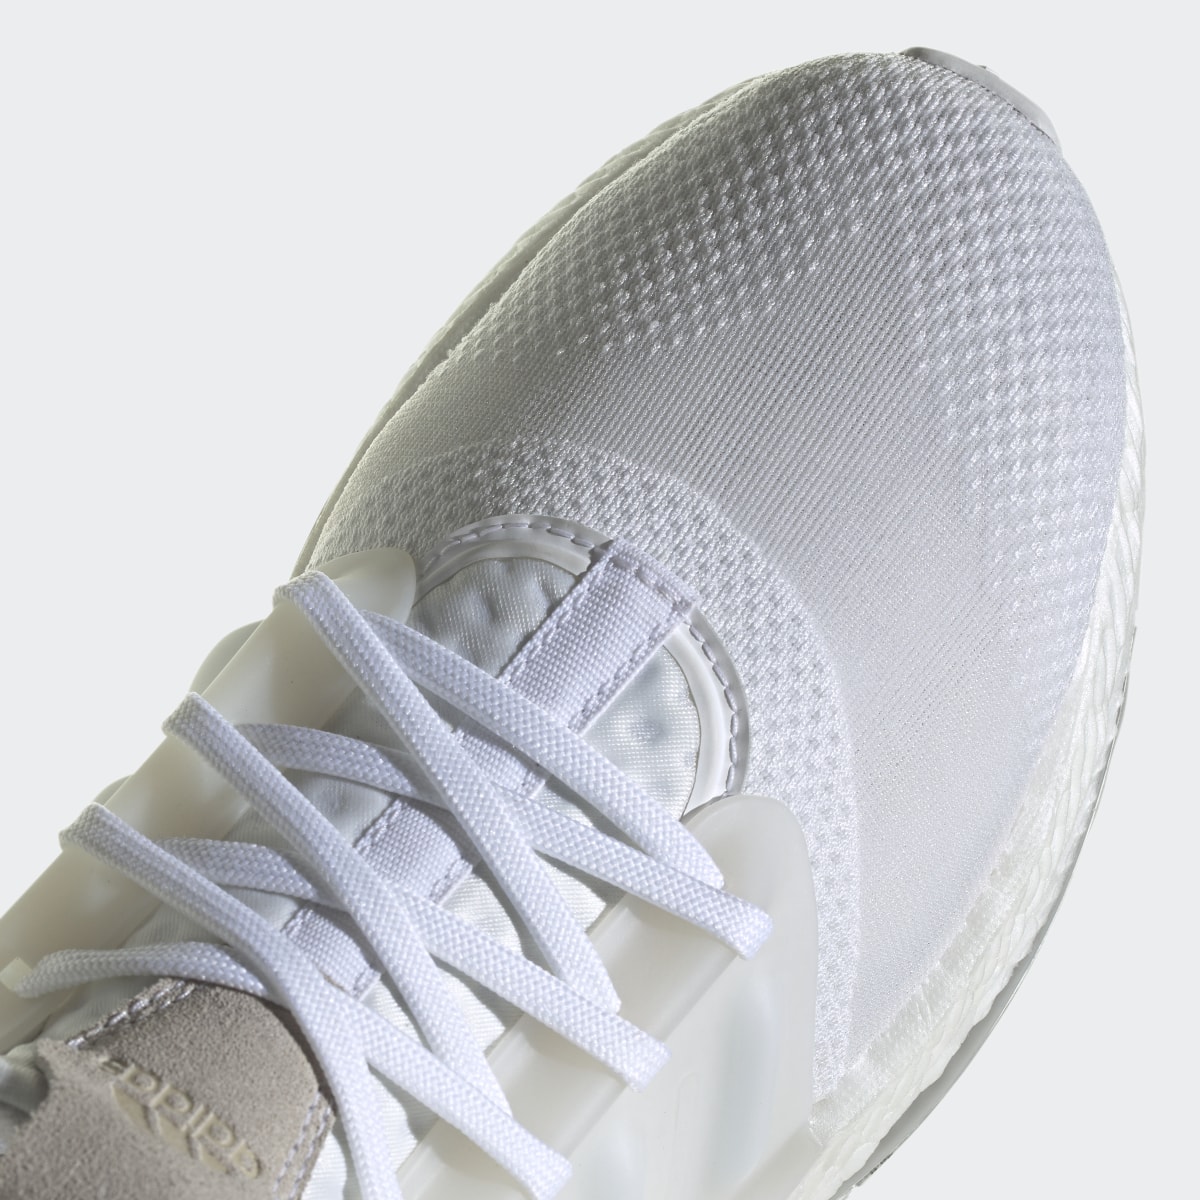 Adidas X_PLRBOOST Schuh. 9